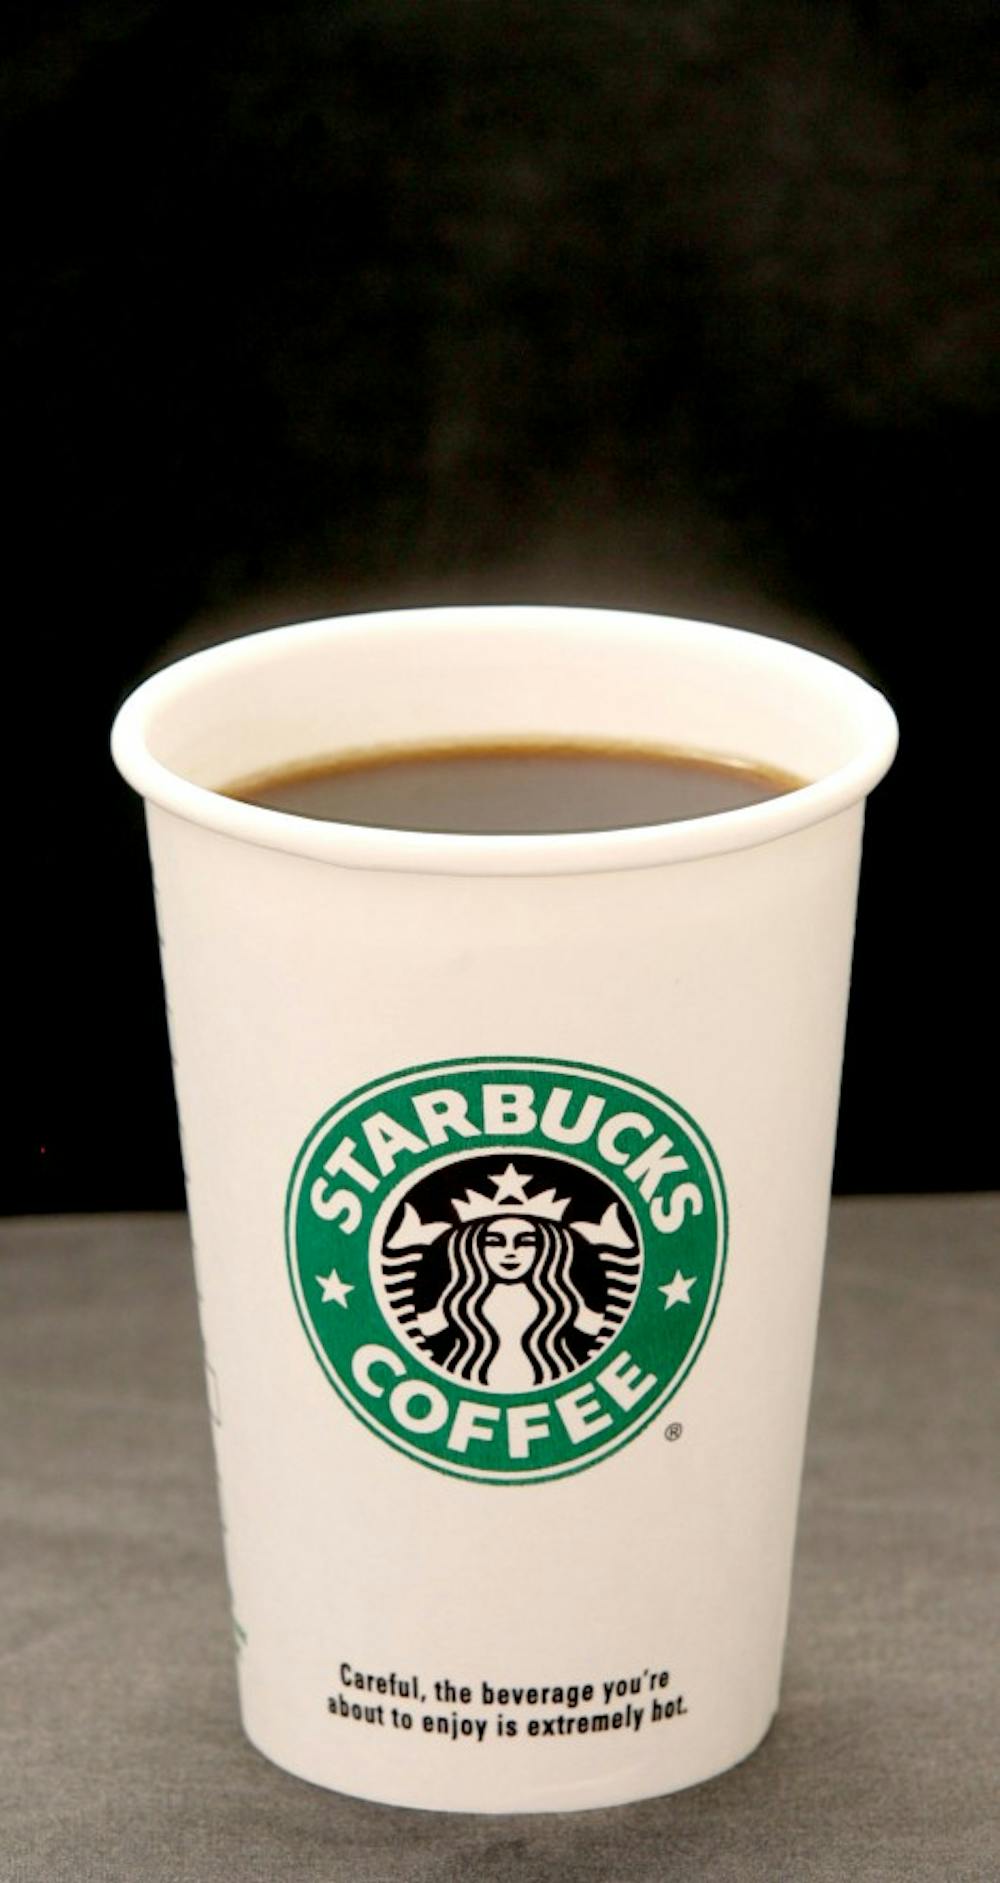 EMU Starbucks now offers $1 reusable plastic cups